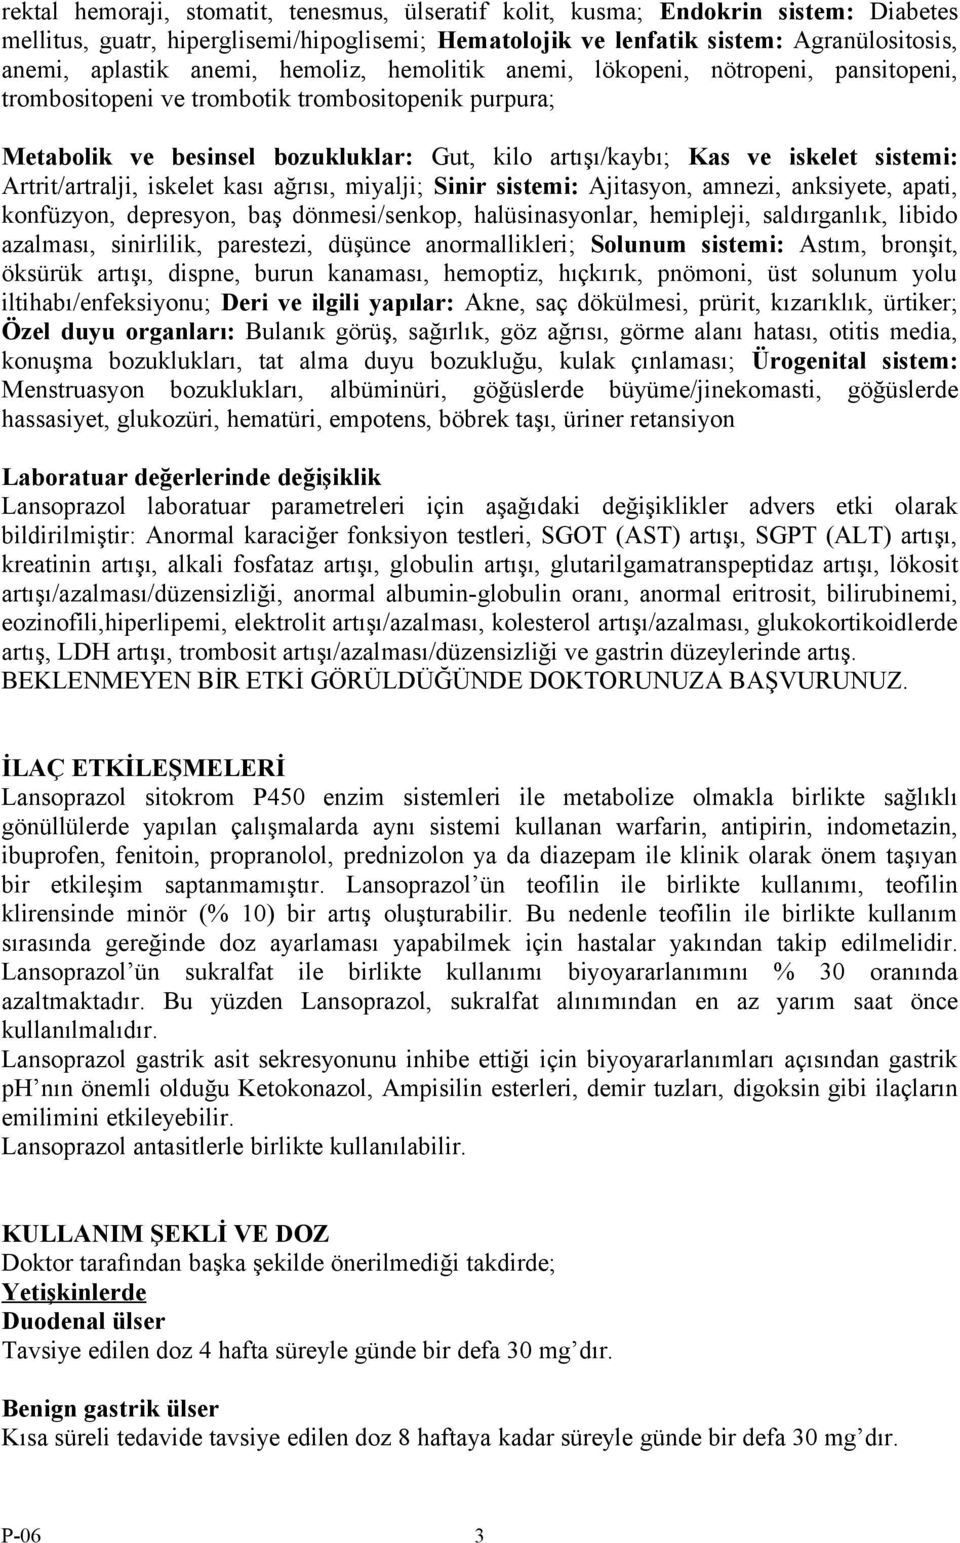 LANSOR 30 mg MİKROPELLET KAPSÜL - PDF Ücretsiz indirin